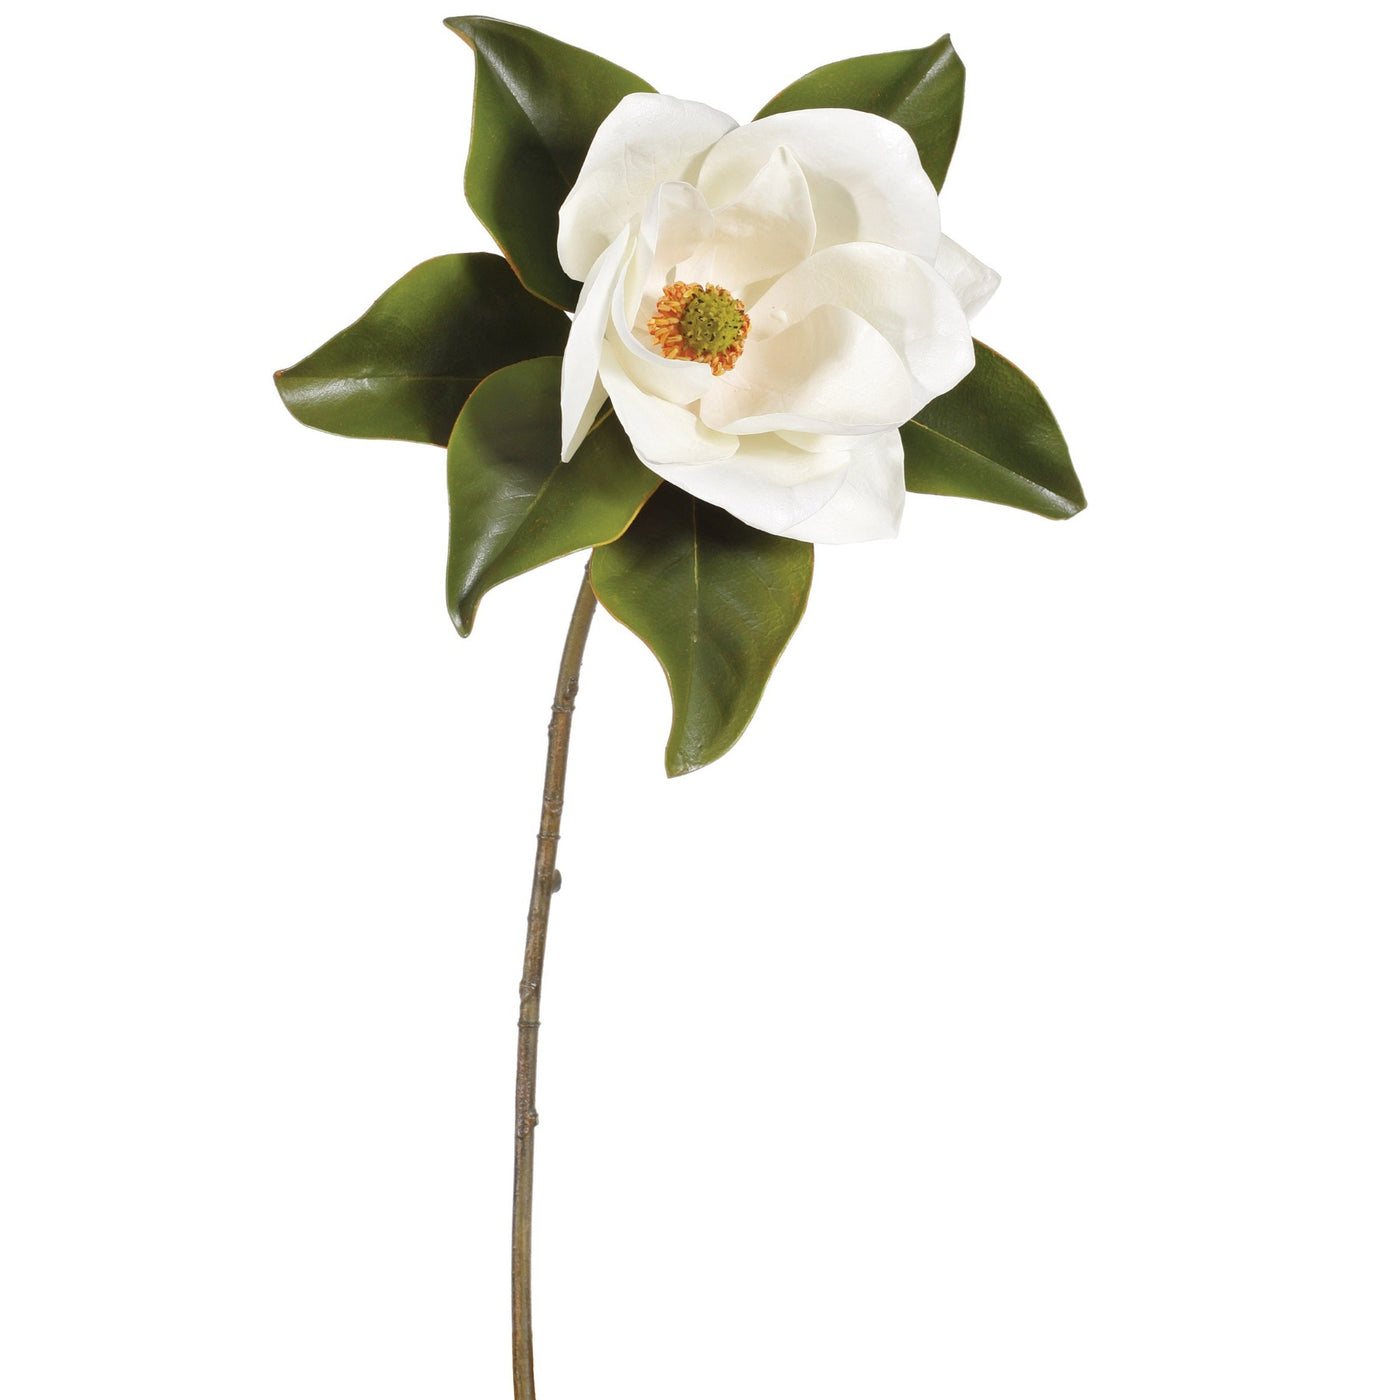 beautiful large white magnolia bloom single stems with lush green foliage